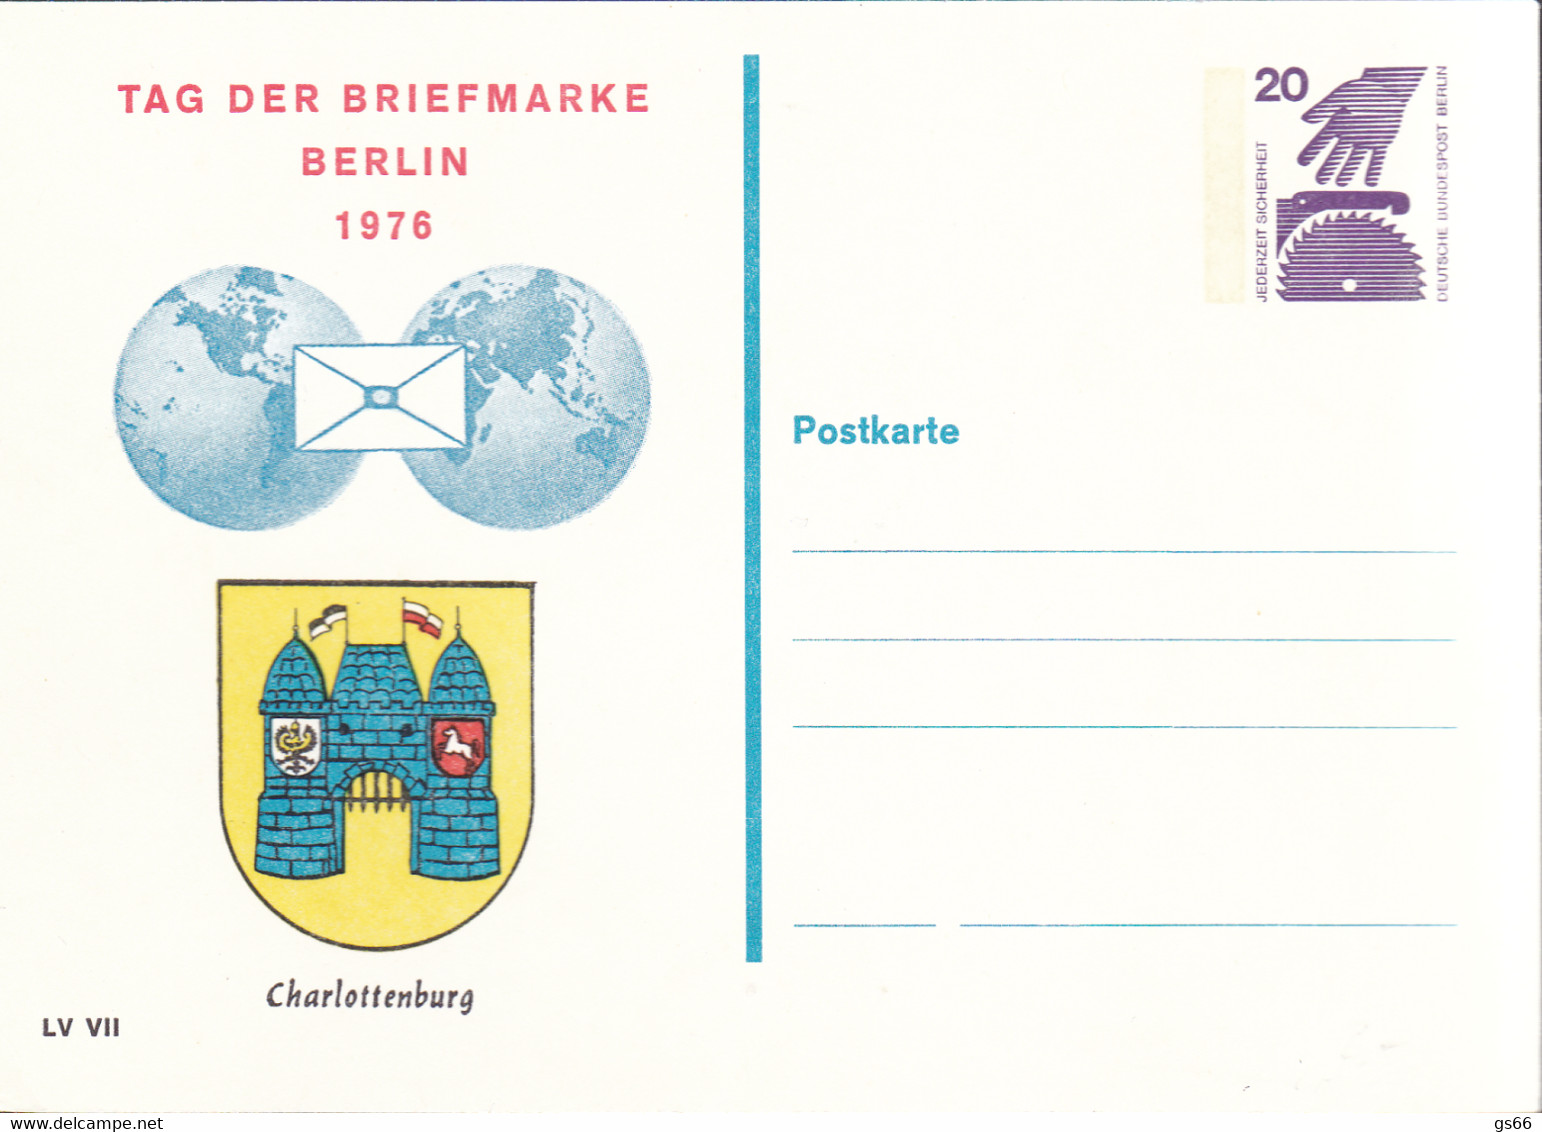 Berlin, PP 063 C2/003, TAG DER BRIEFMARKE 1976, Charlottenburg - Private Covers - Mint